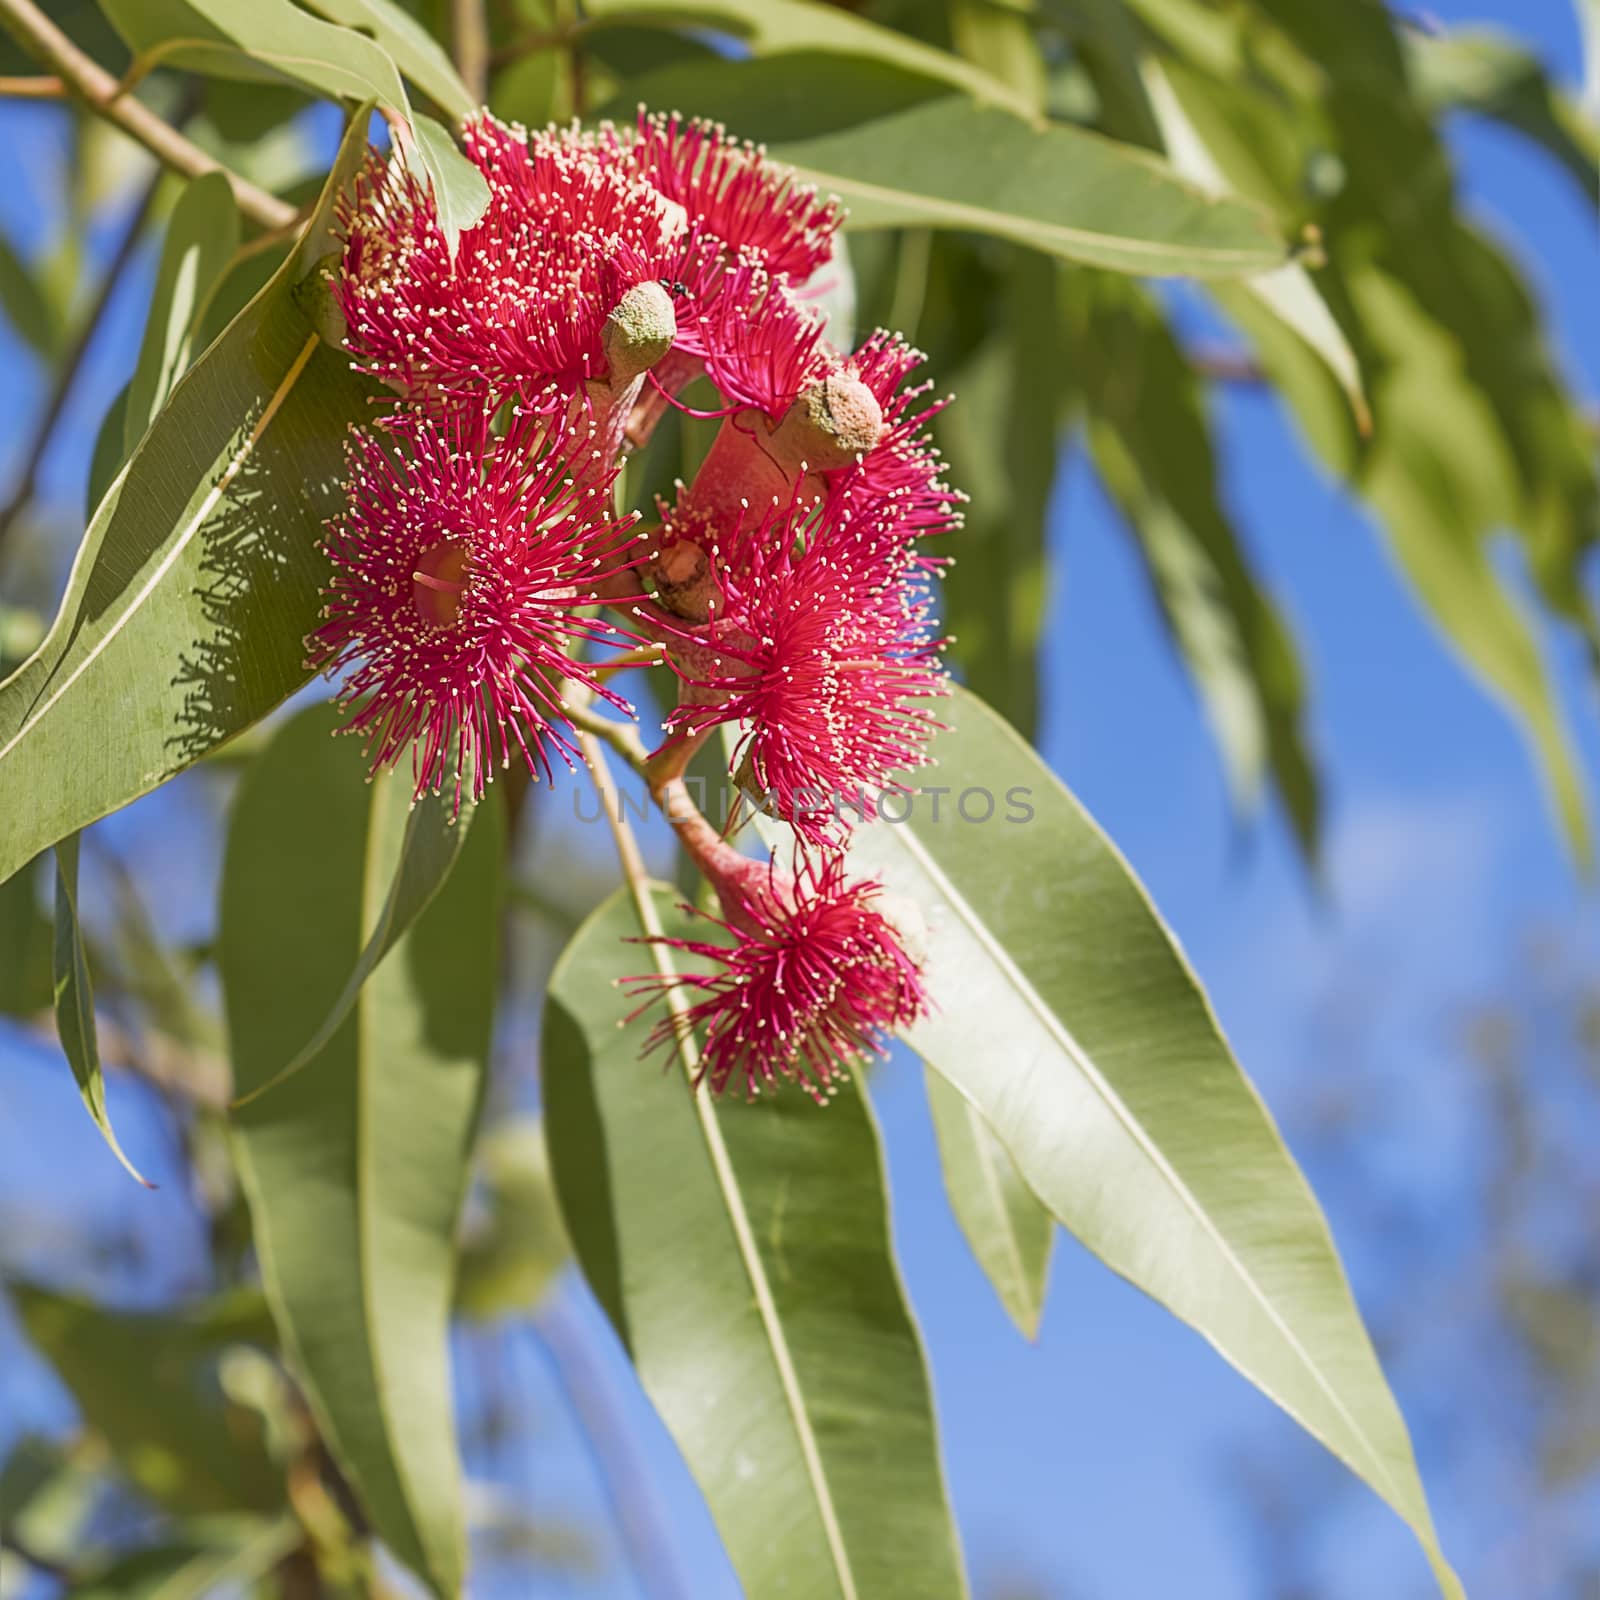 Australian iconic red gum flowers   by sherj